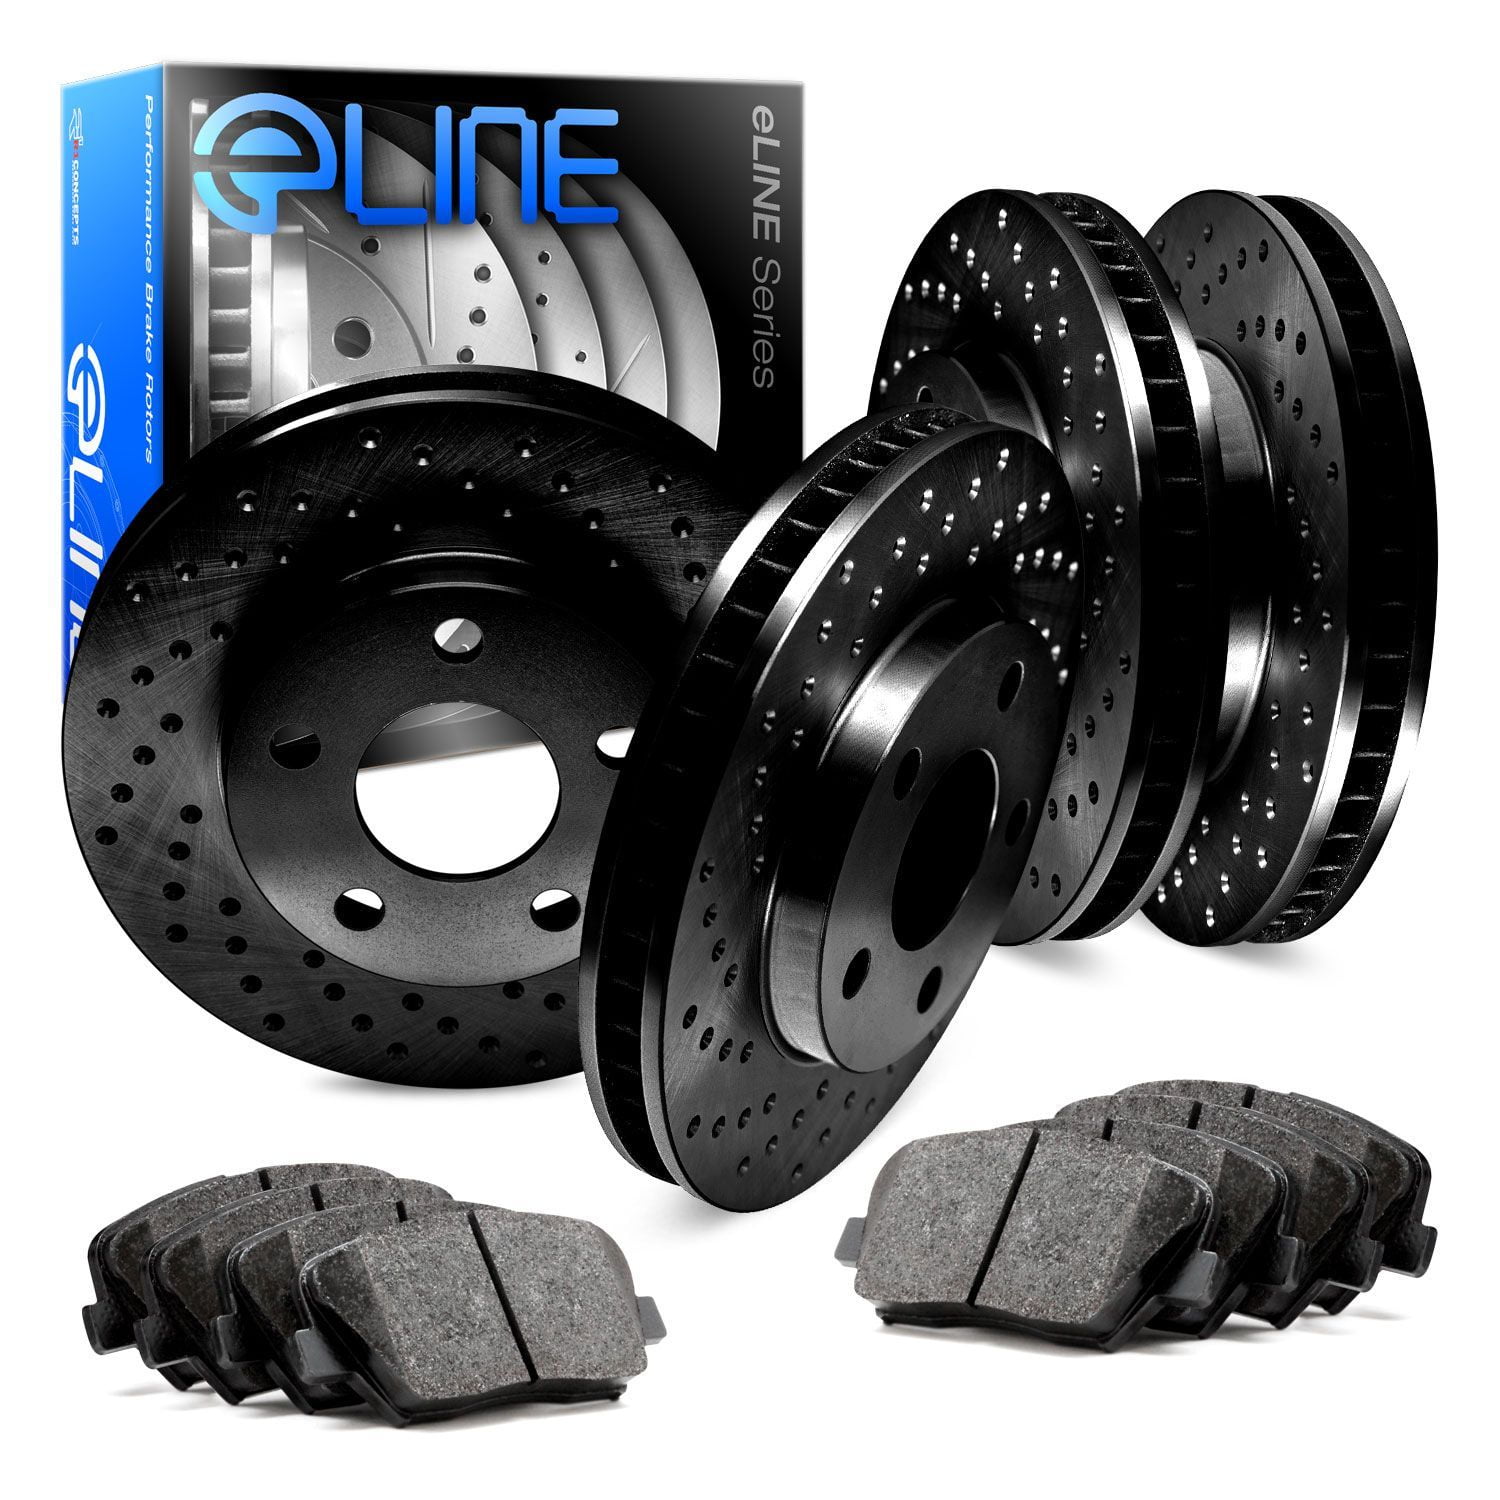 Full Kit Replacement Brake Rotors Disc and Ceramic Pads For Montana,Relay